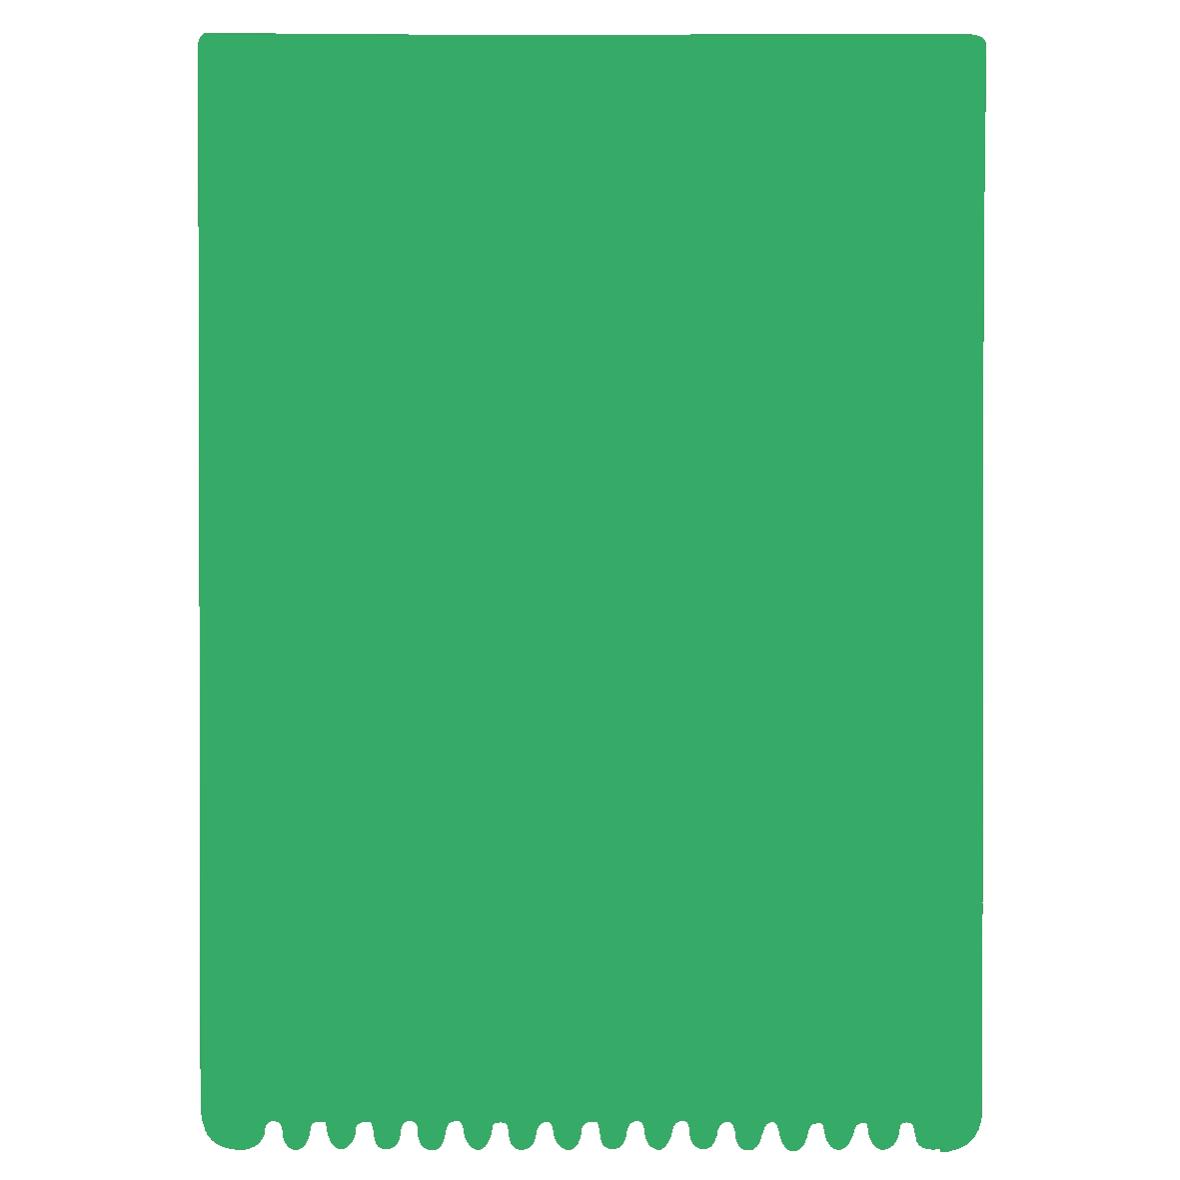 Eiskratzer Rechteck, standard-grün-04225005-00000